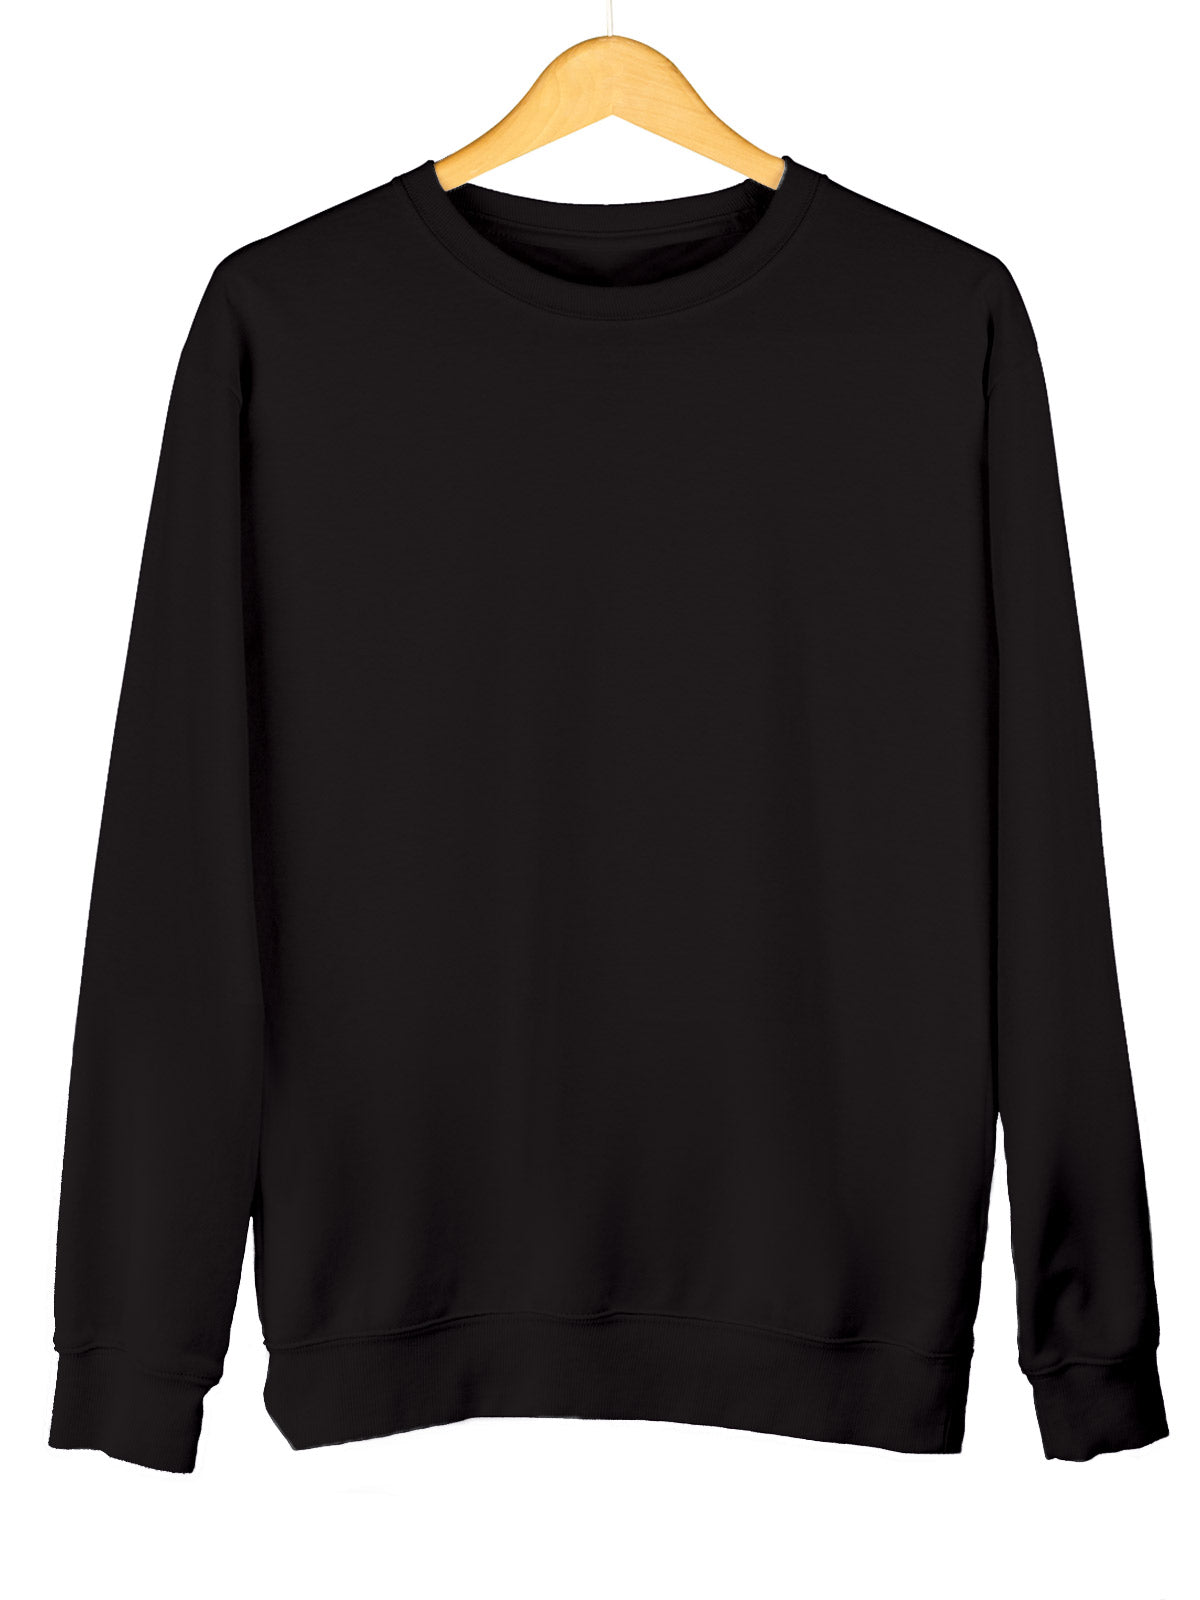 Black & Lavender Unisex Plain Sweatshirt Combo